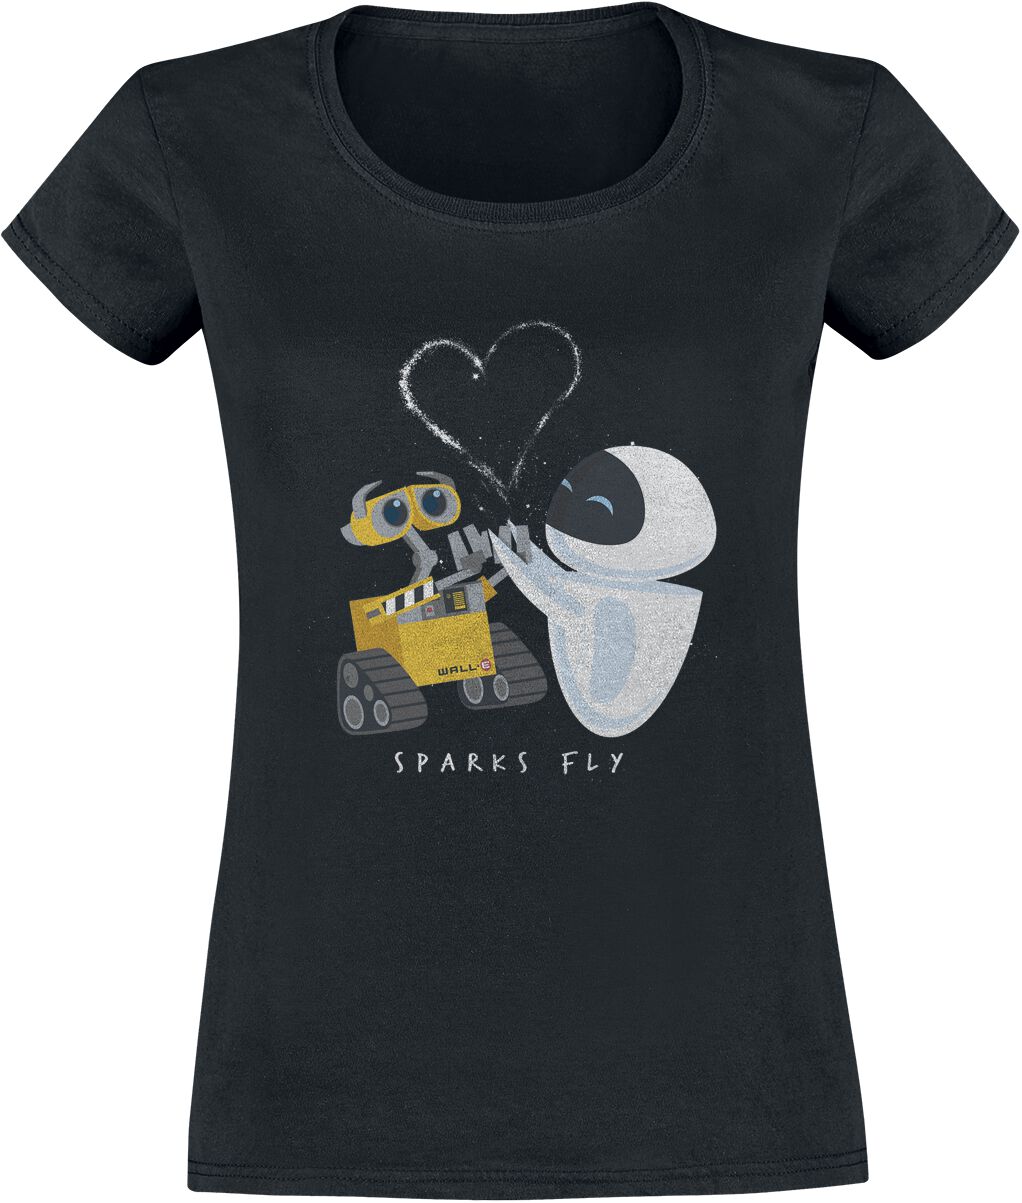 Wall-E Sparks Fly T-Shirt black